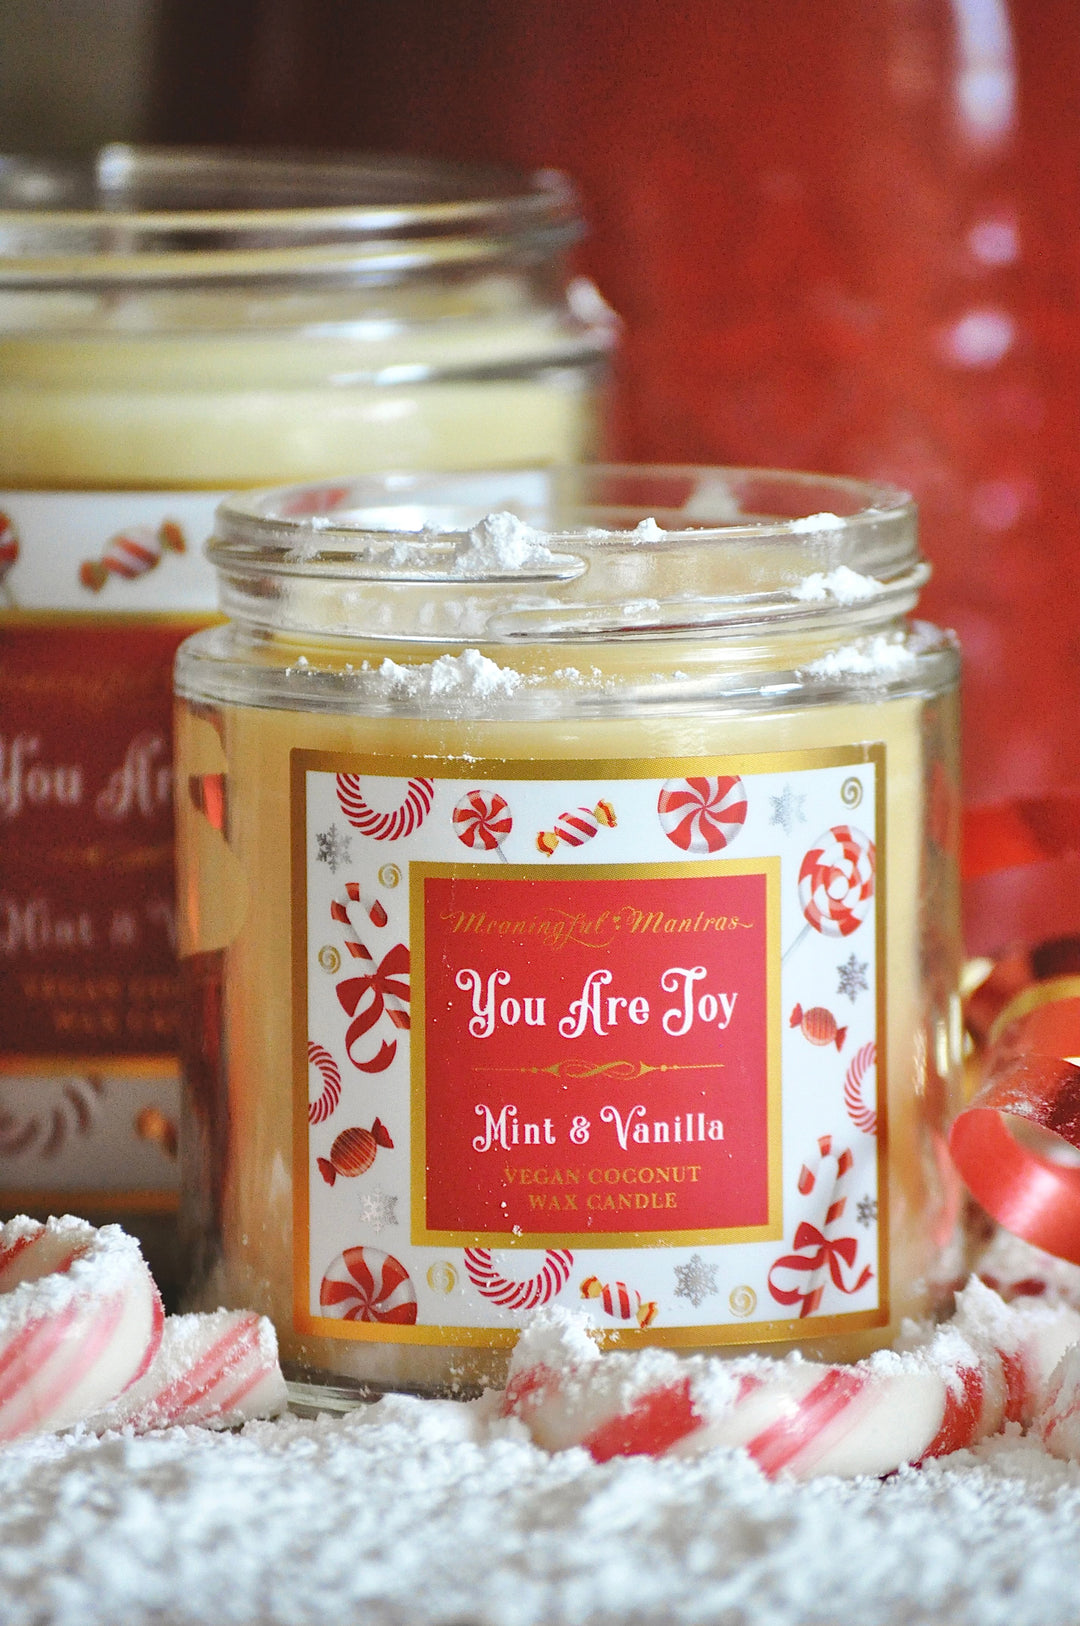 You Are Joy Mint & Vanilla 4oz Mini Candle